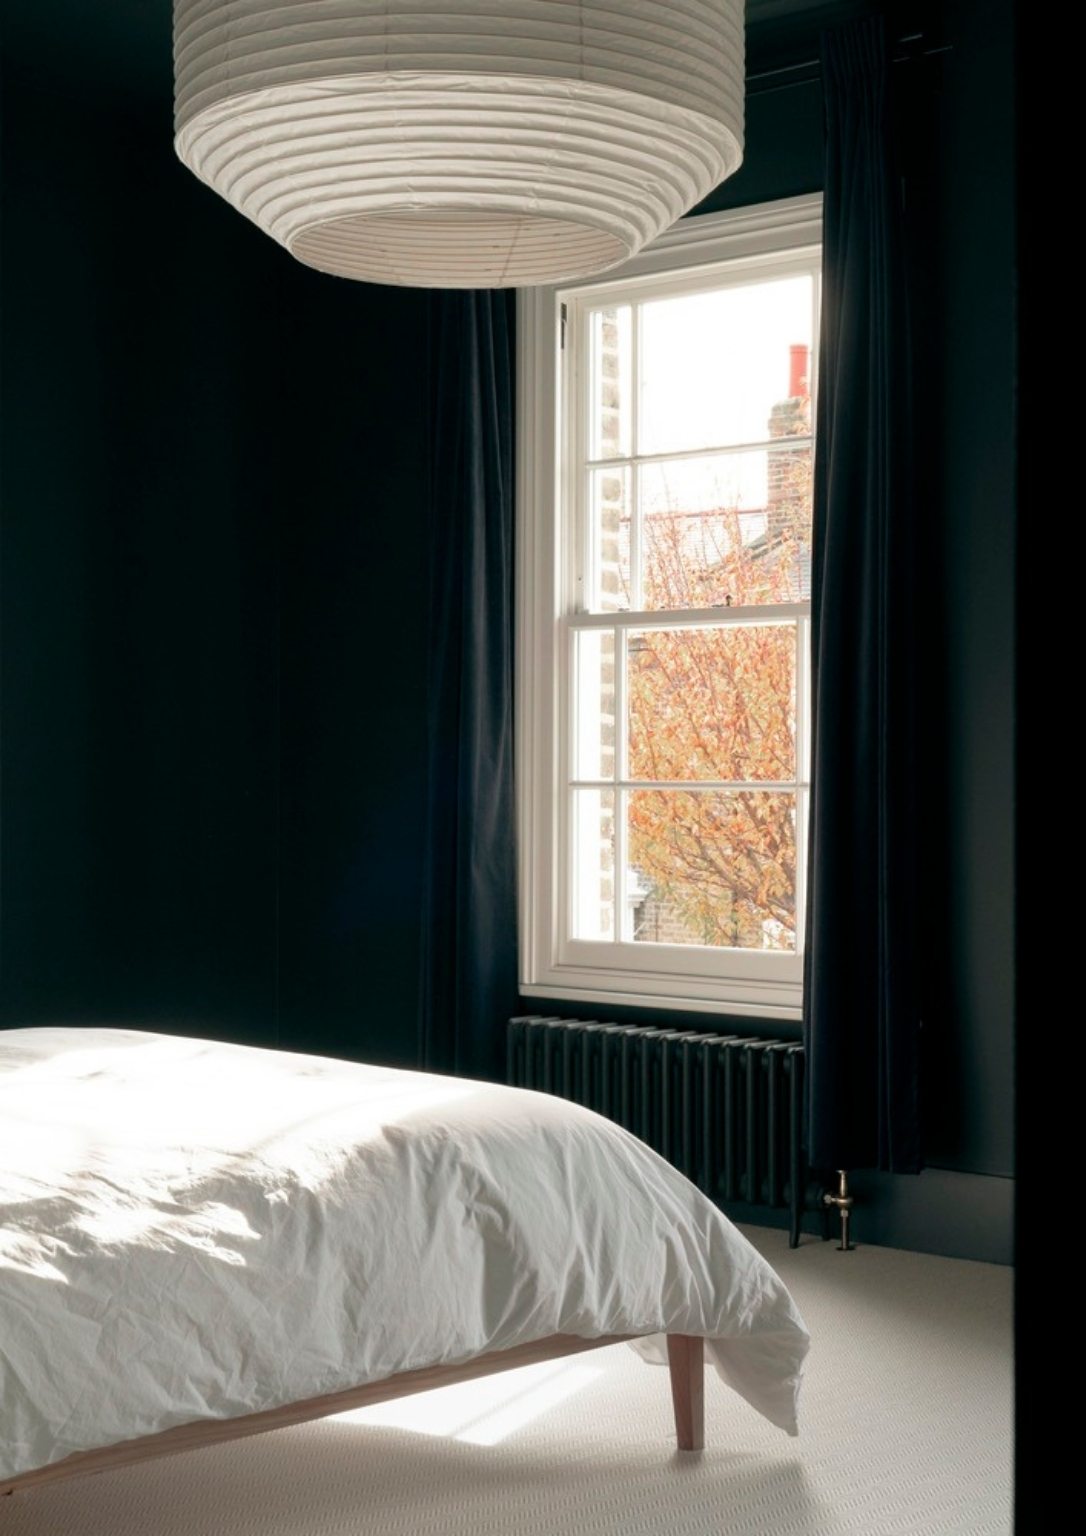 interior of modern minimalist bedroom with bed, dark walls, and paper lighting fixture